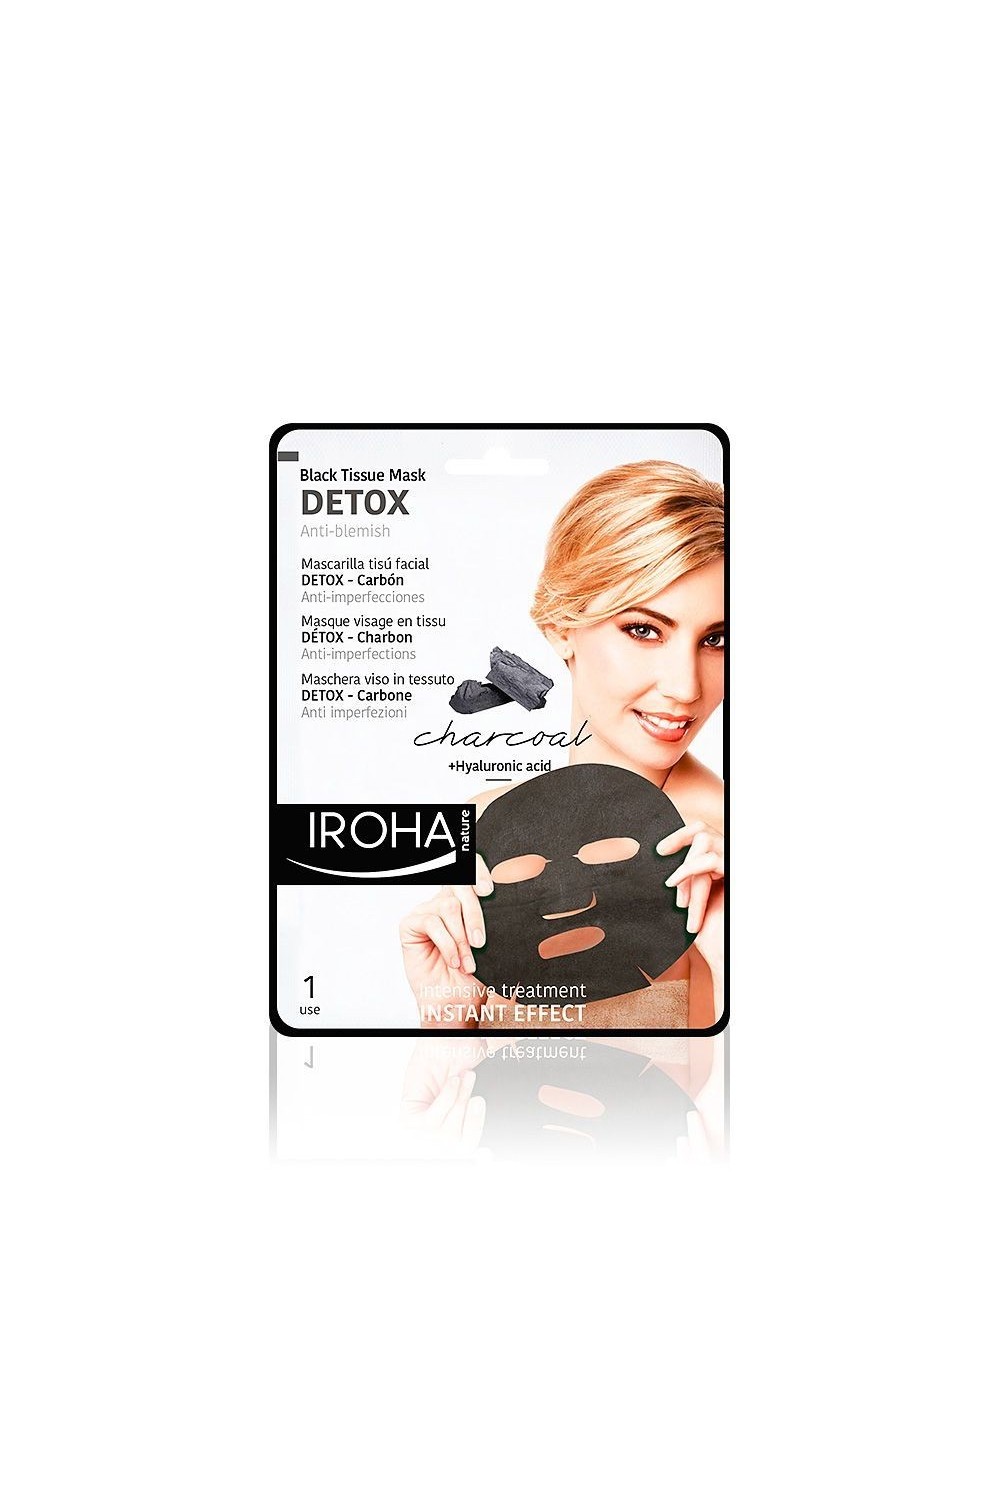 Iroha Nature Detox Black Tissue Mask 1 Unit